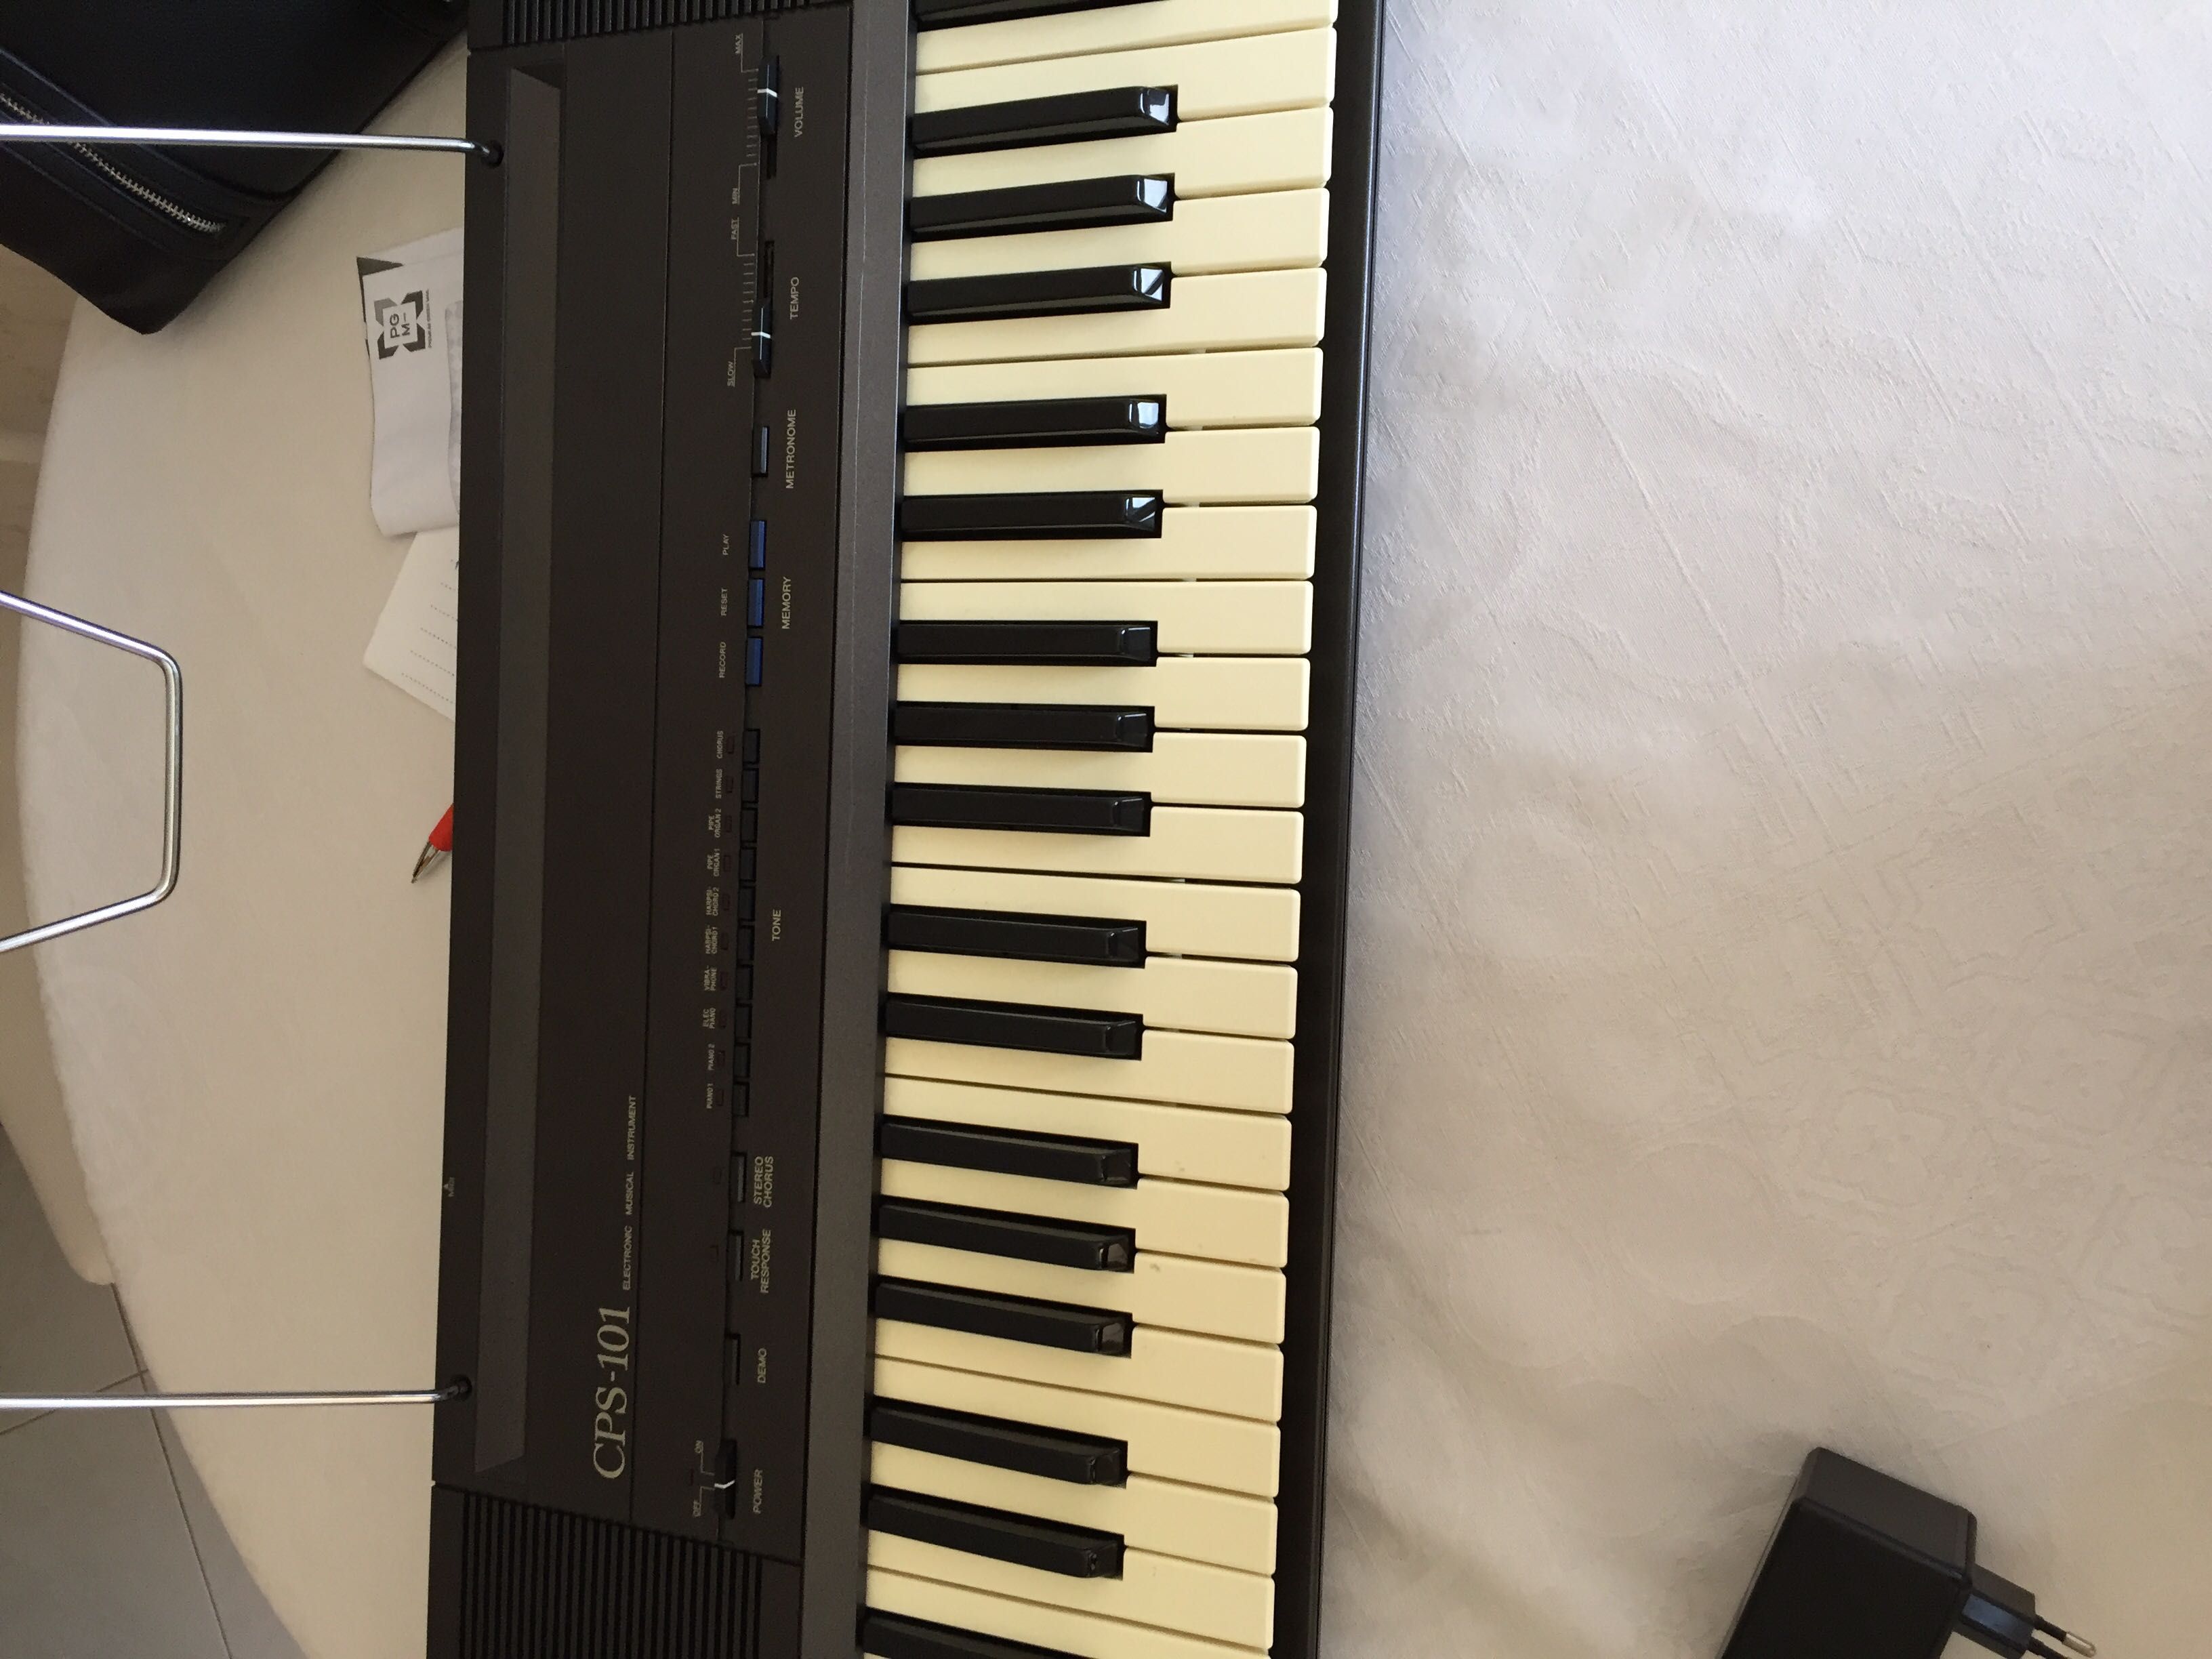 Piano Casio CPS-101